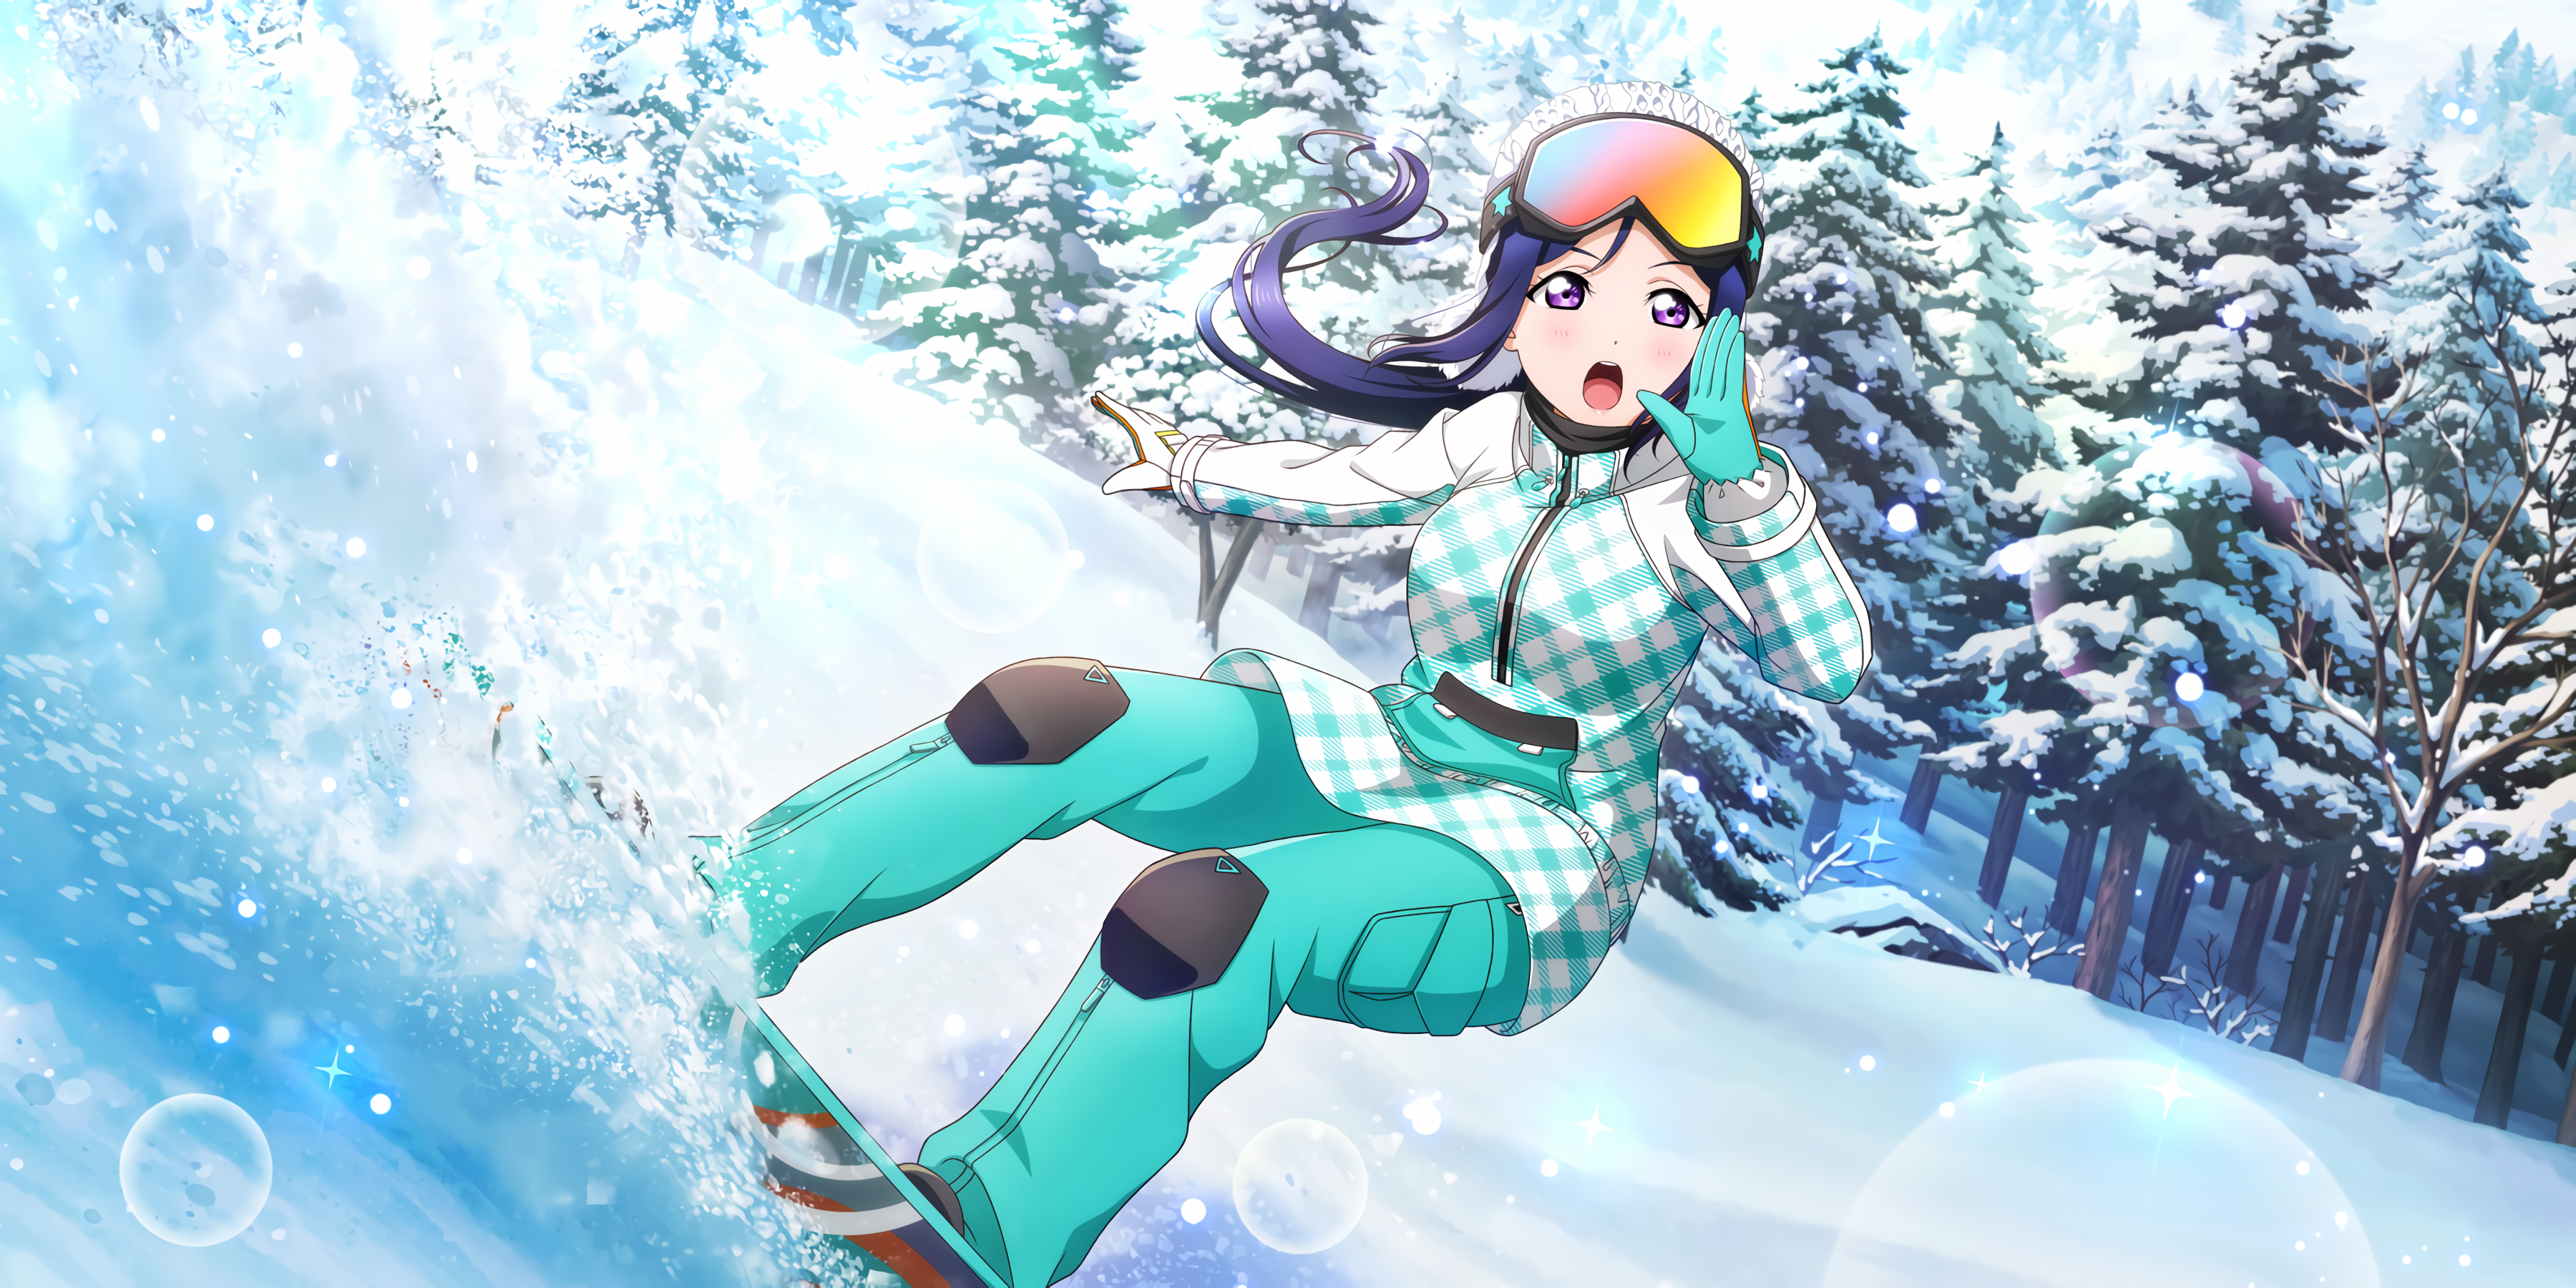 Anime 3600x1800 Matsuura Kanan Love Live! Sunshine Love Live! anime anime girls snow gloves trees snowboarding snowboards